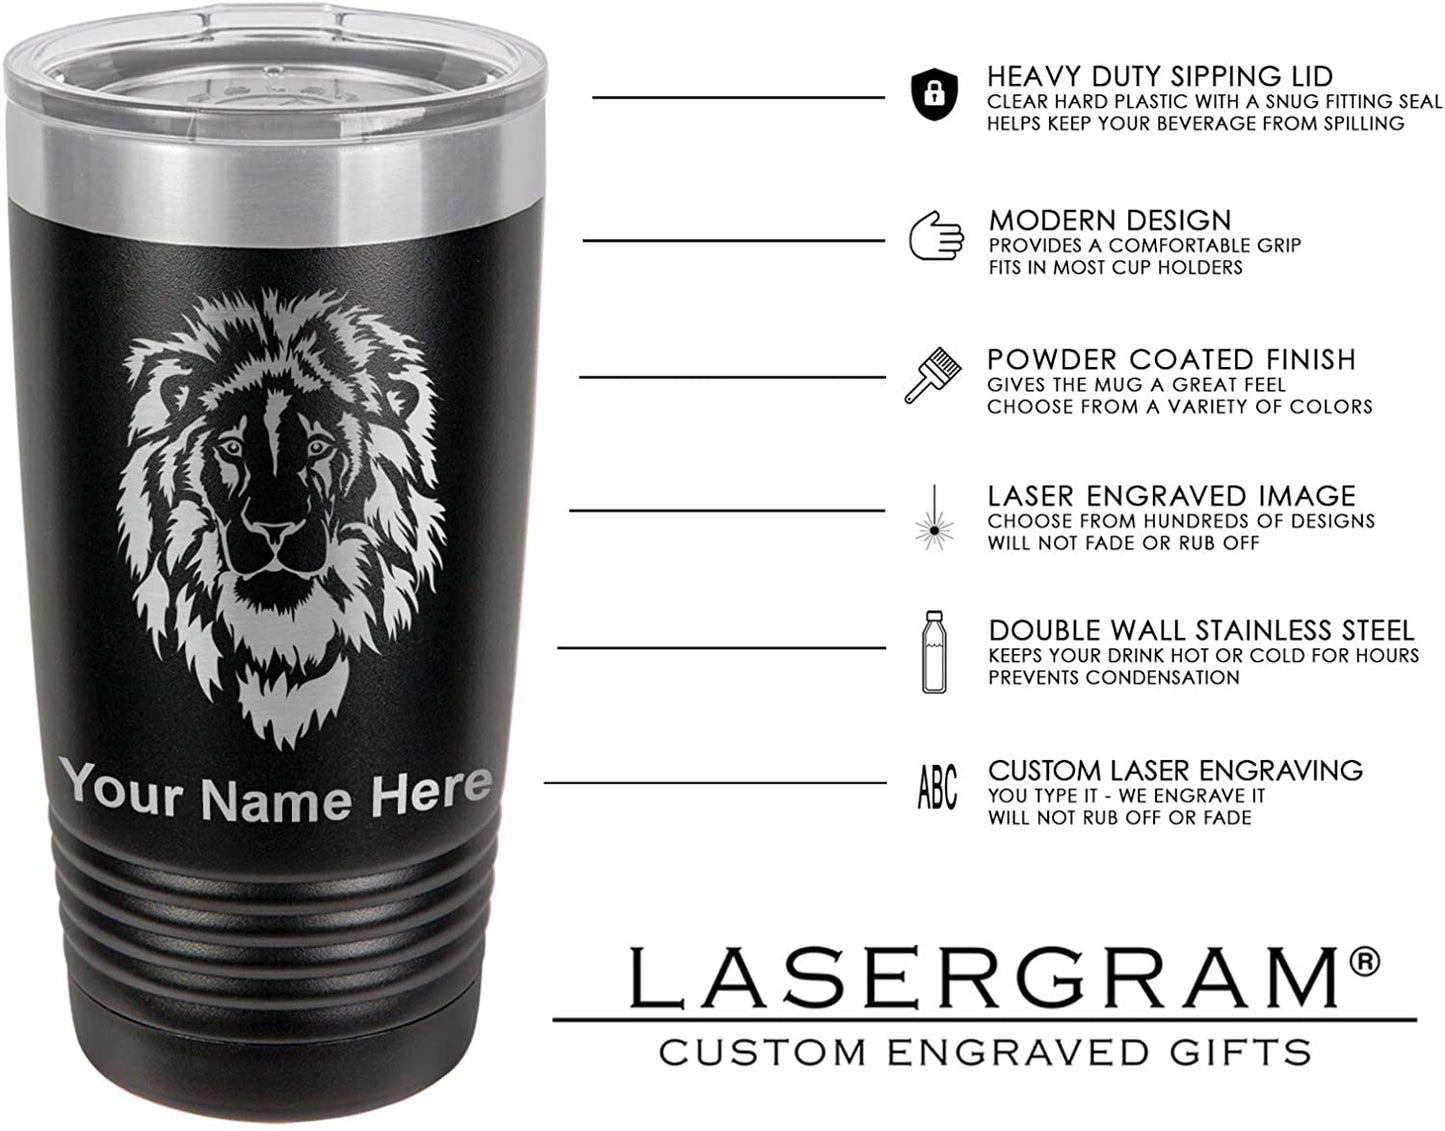 20oz Vacuum Insulated Tumbler Mug, Panda Bear, Personalized Engraving Included